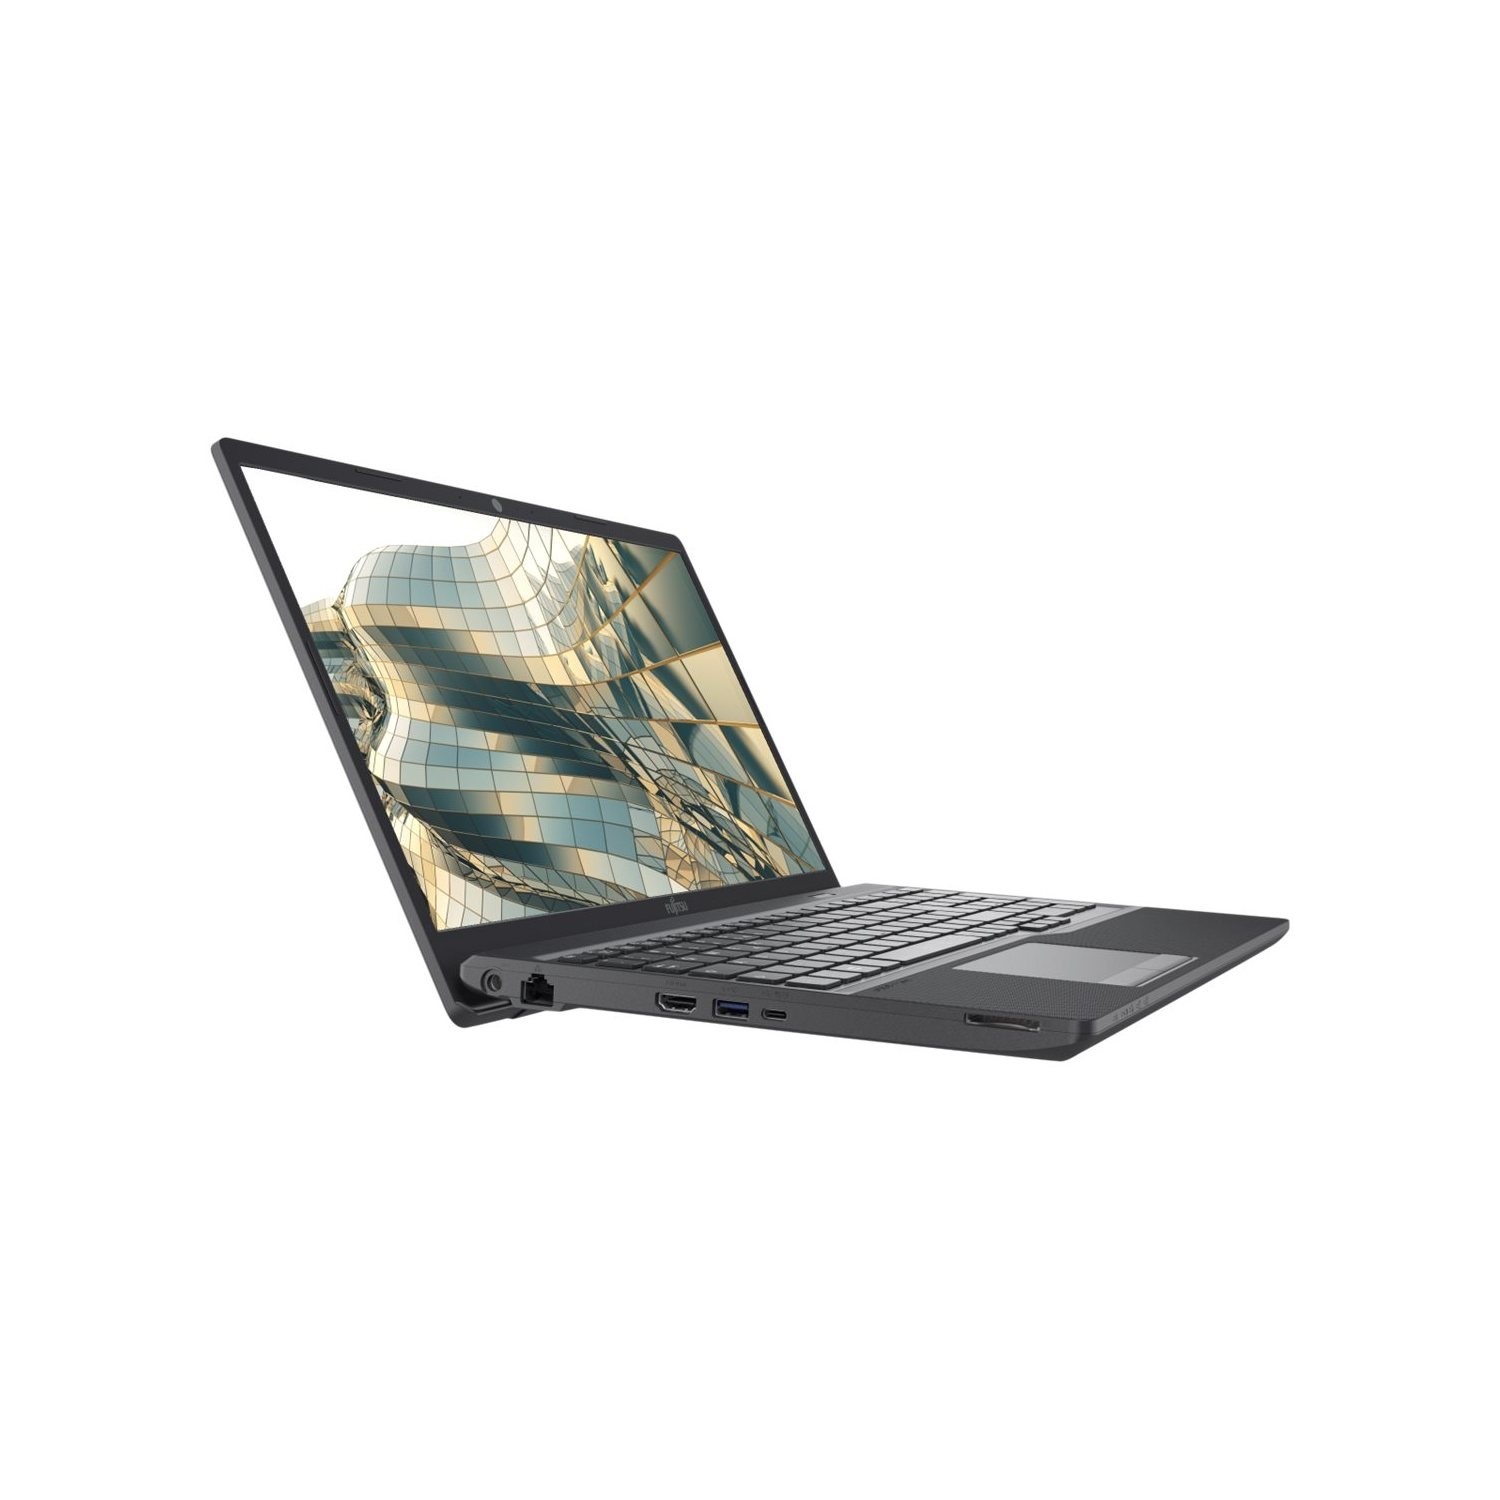 Fujitsu Lifebook A3510 Core i3-1005G1 8GB 256GB 15.6 Inch Windows 10 Pro  Laptop